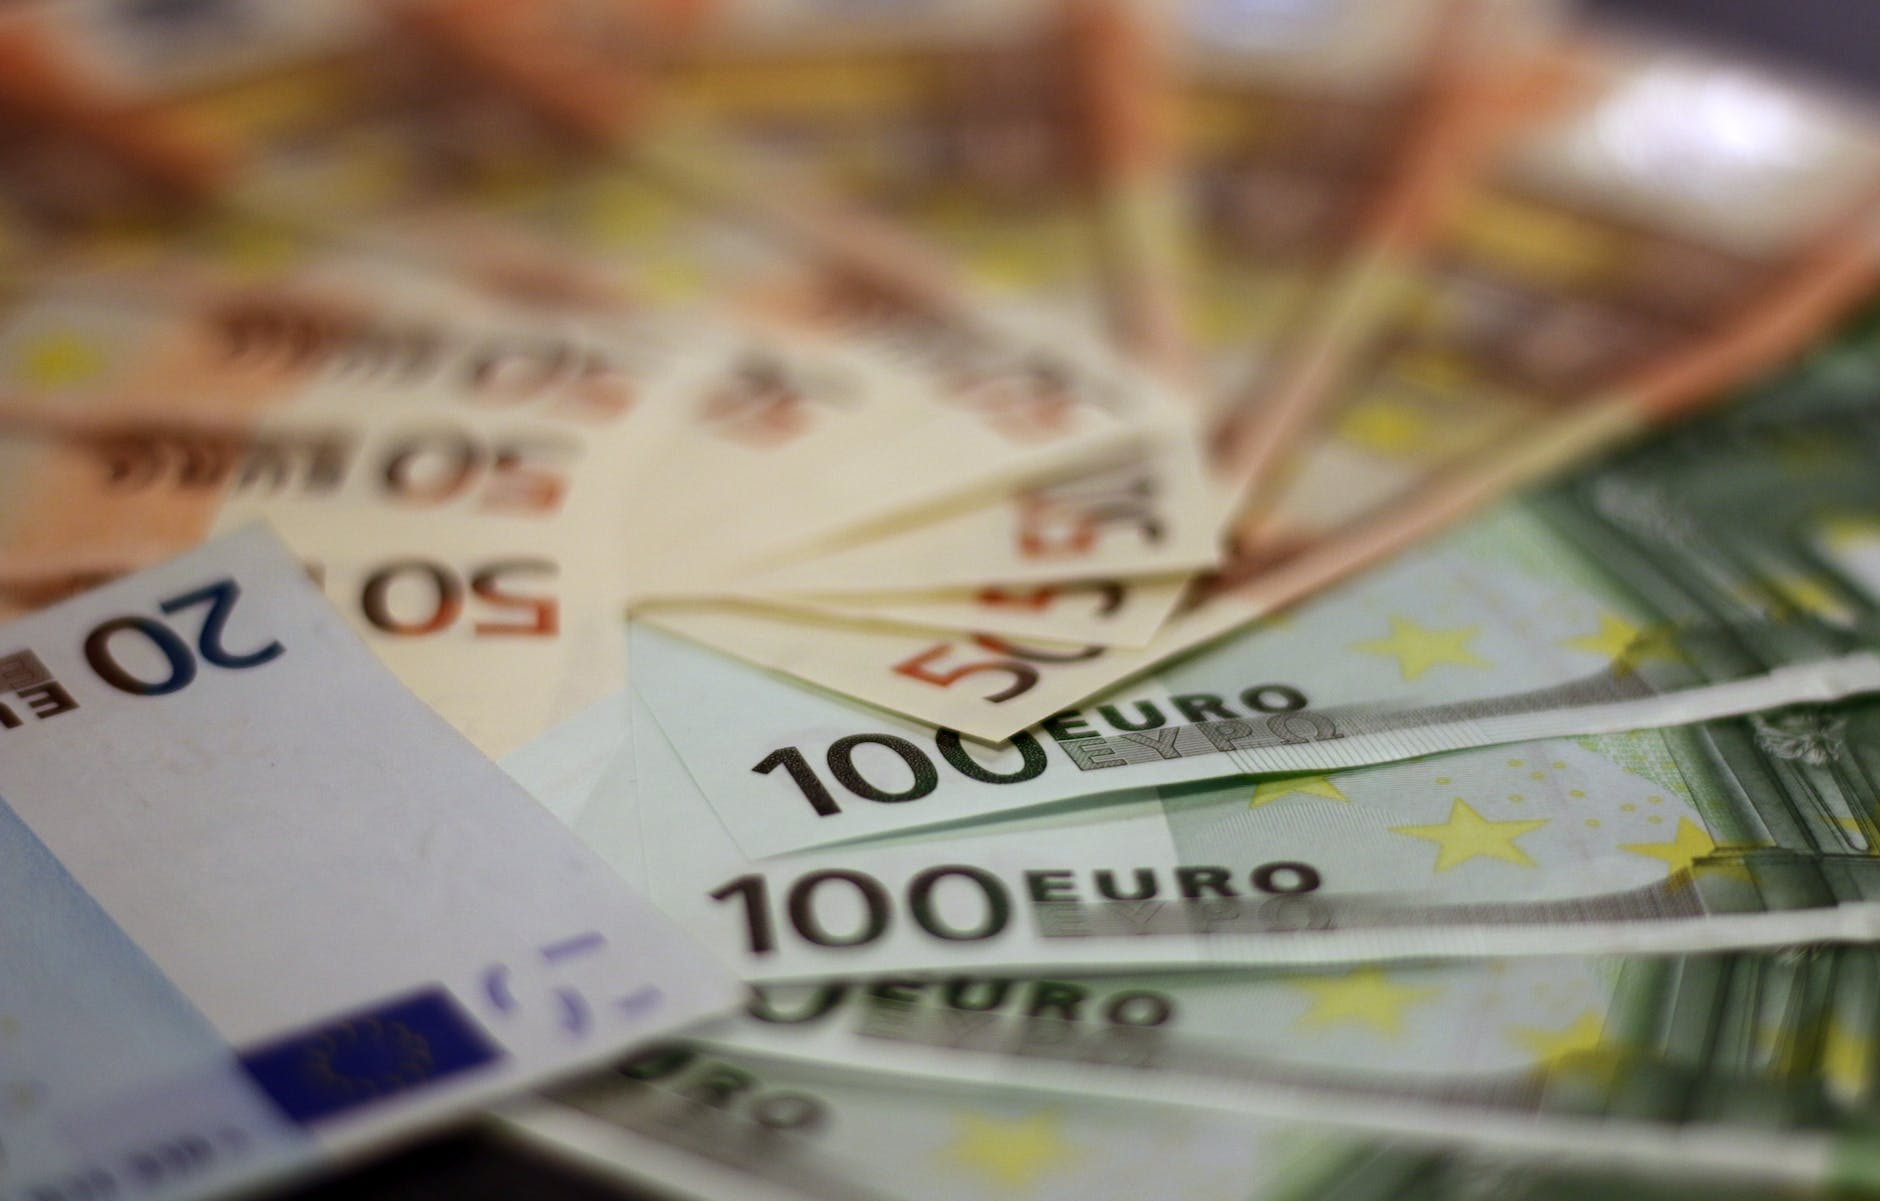 Media Scope Group supports raising Estonia’s minimum wage